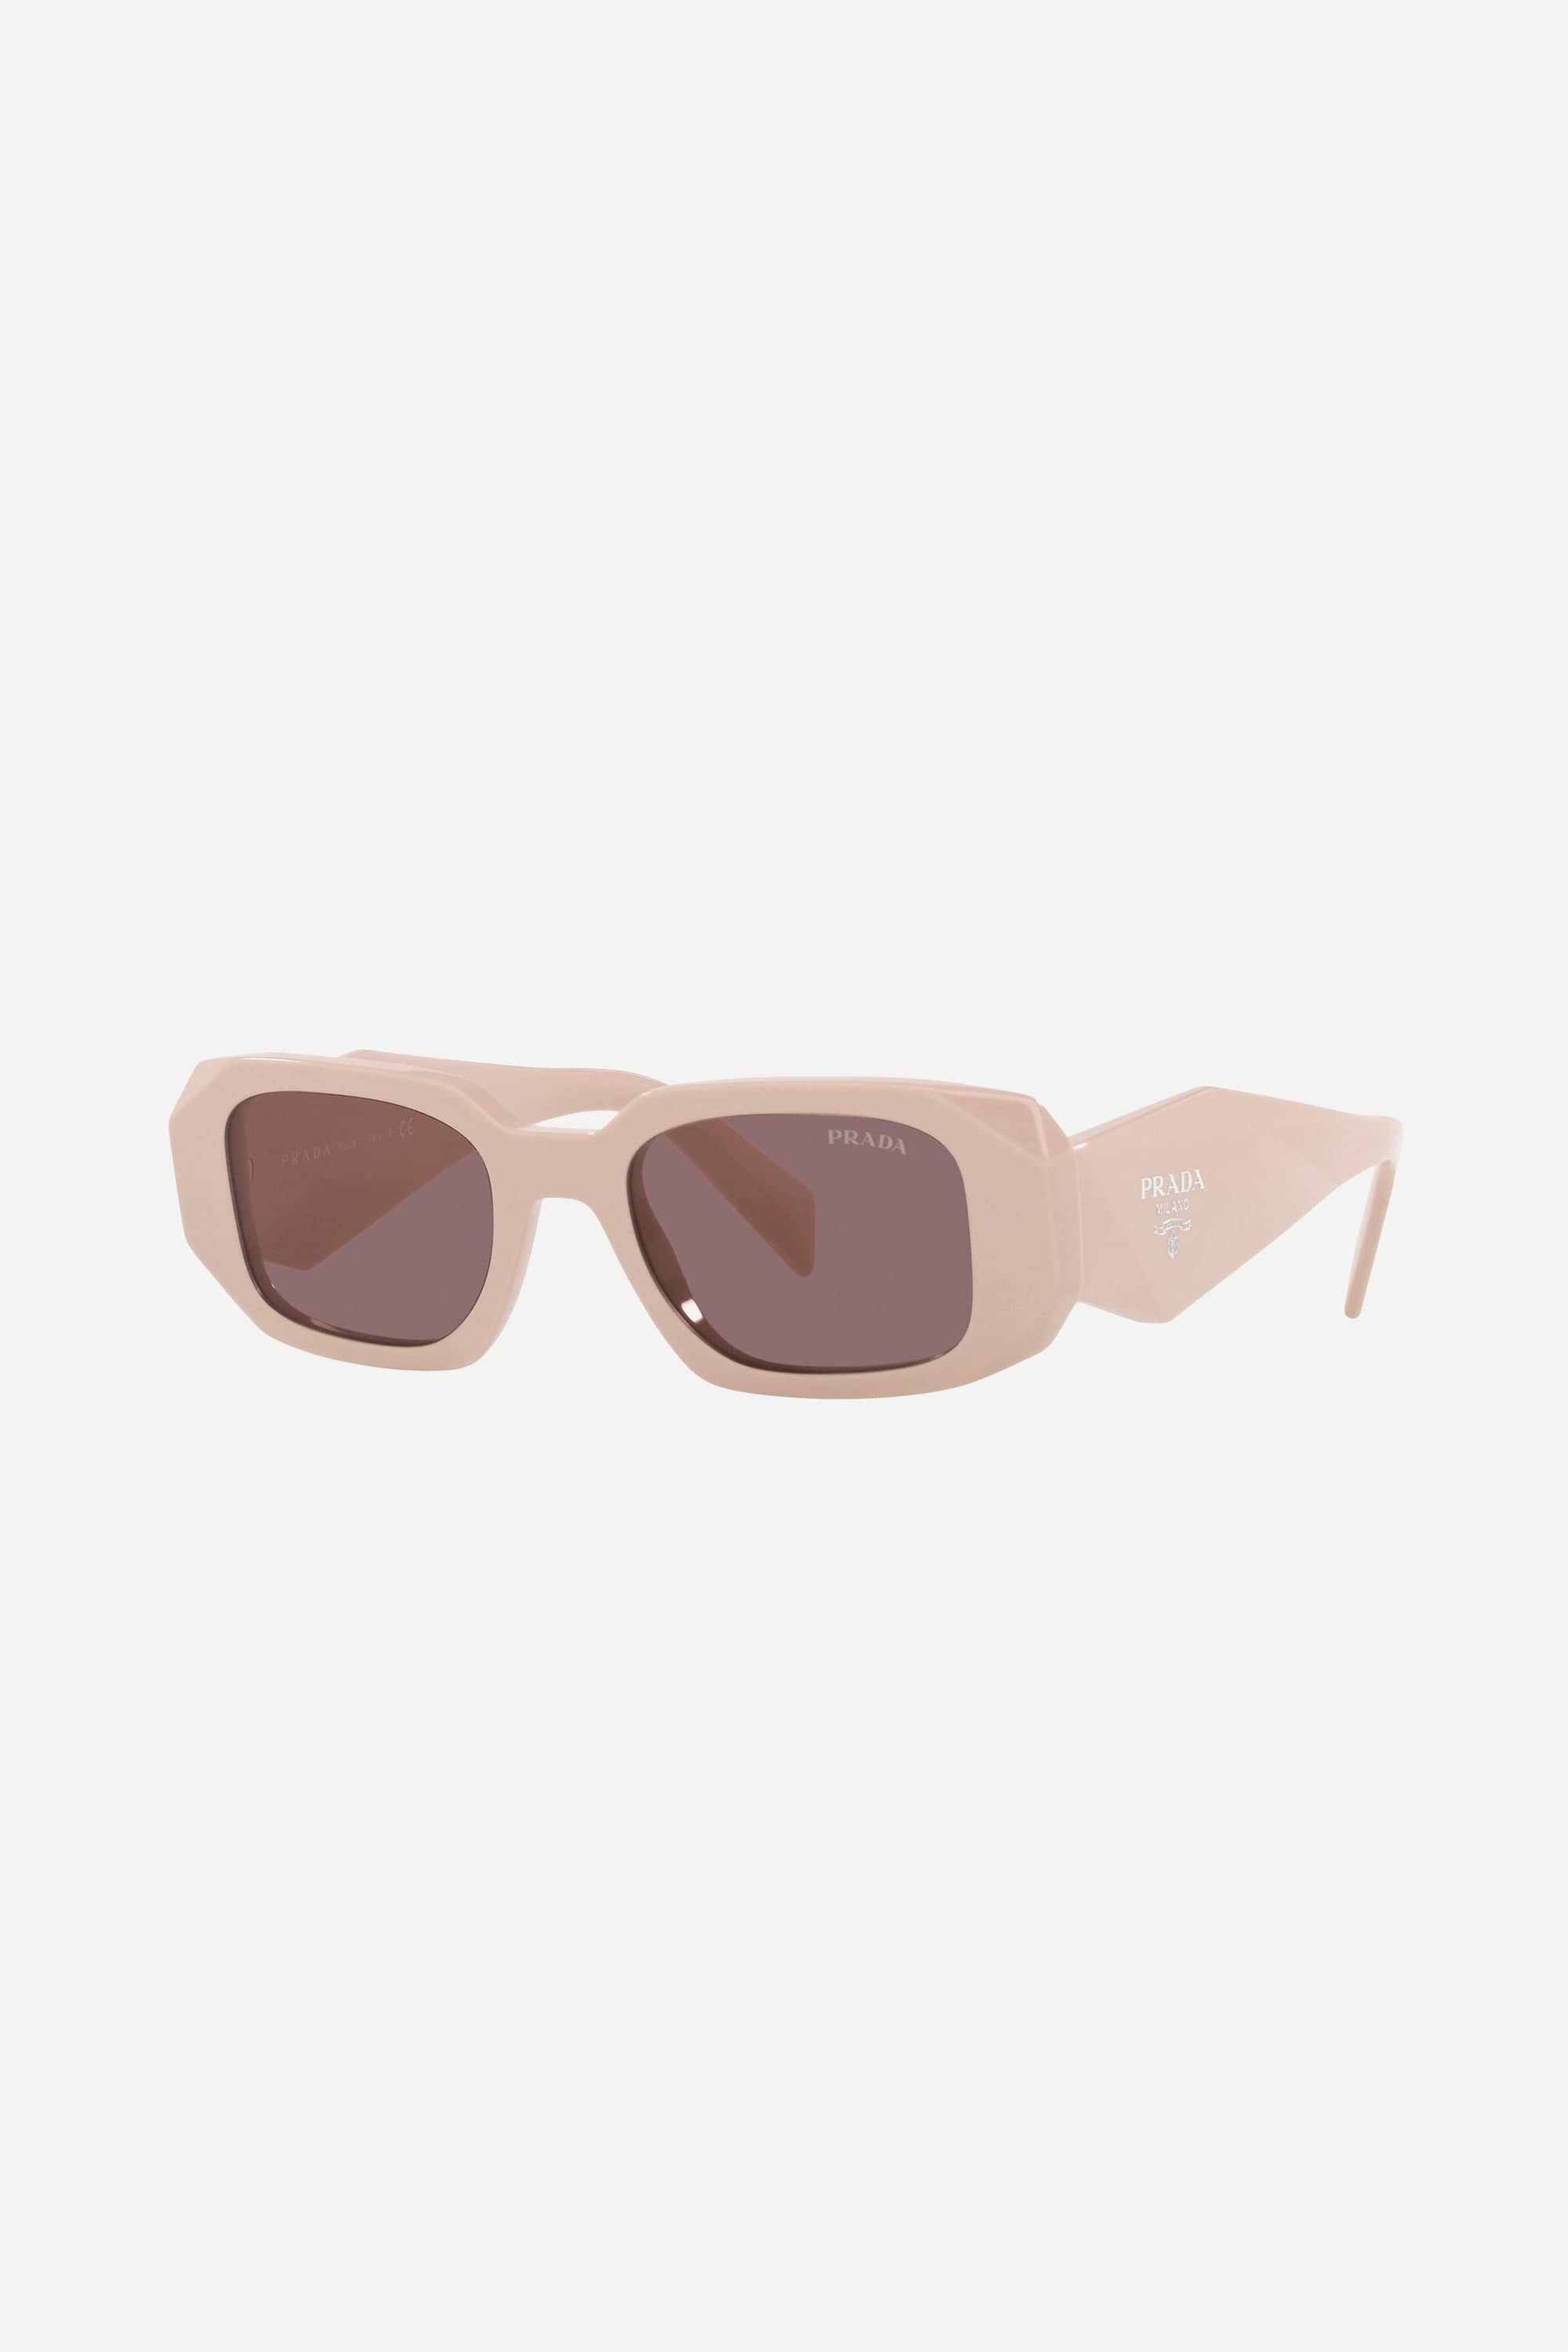 Prada PR17WS symbol nude oval sunglasses - Eyewear Club